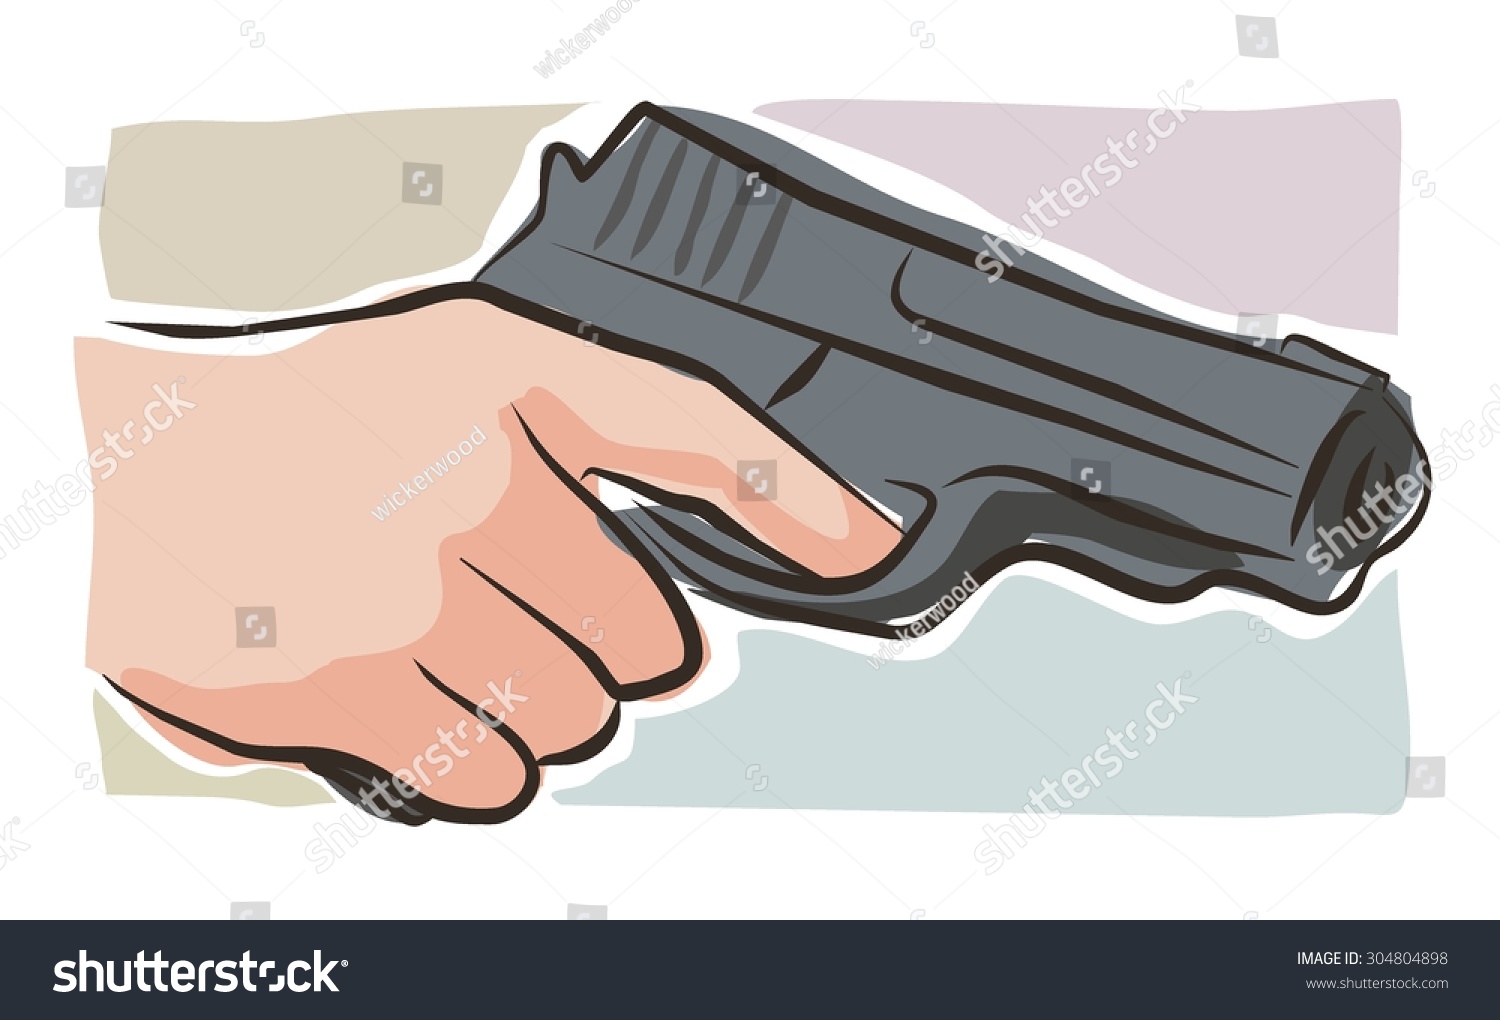 Пистолет в руке референс